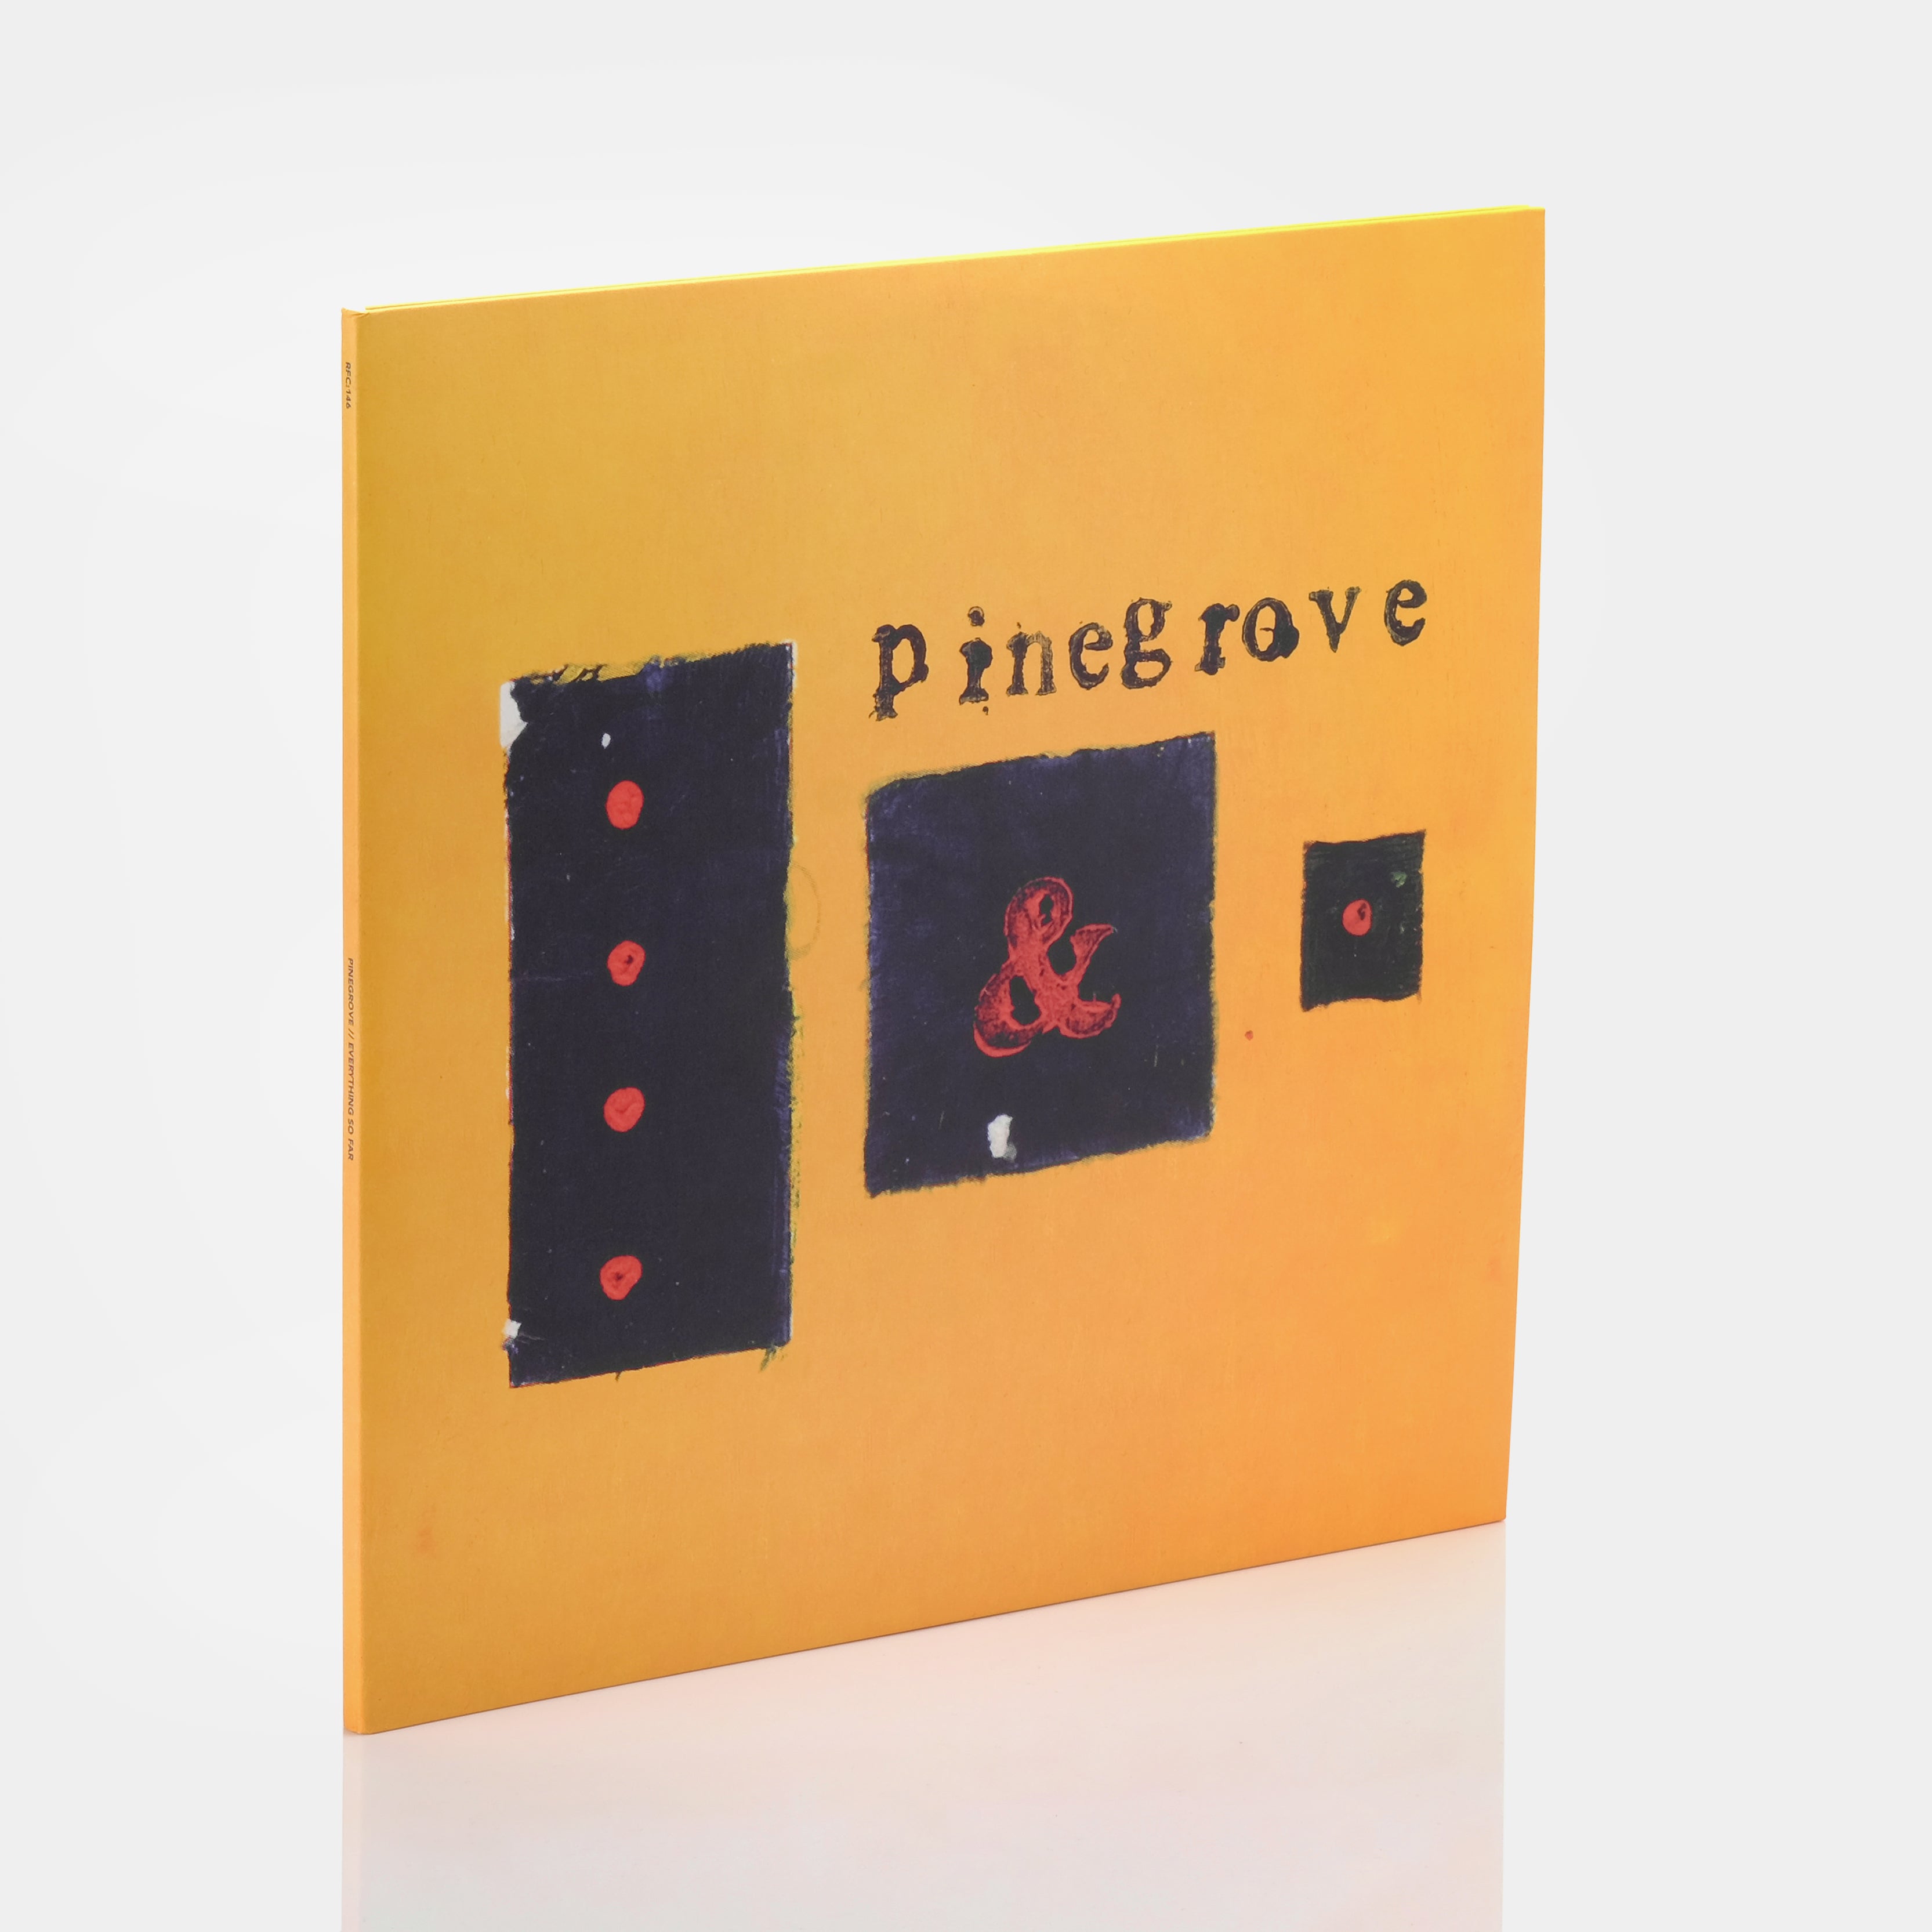 Pinegrove - Everything So Far 2xLP Vinyl Record